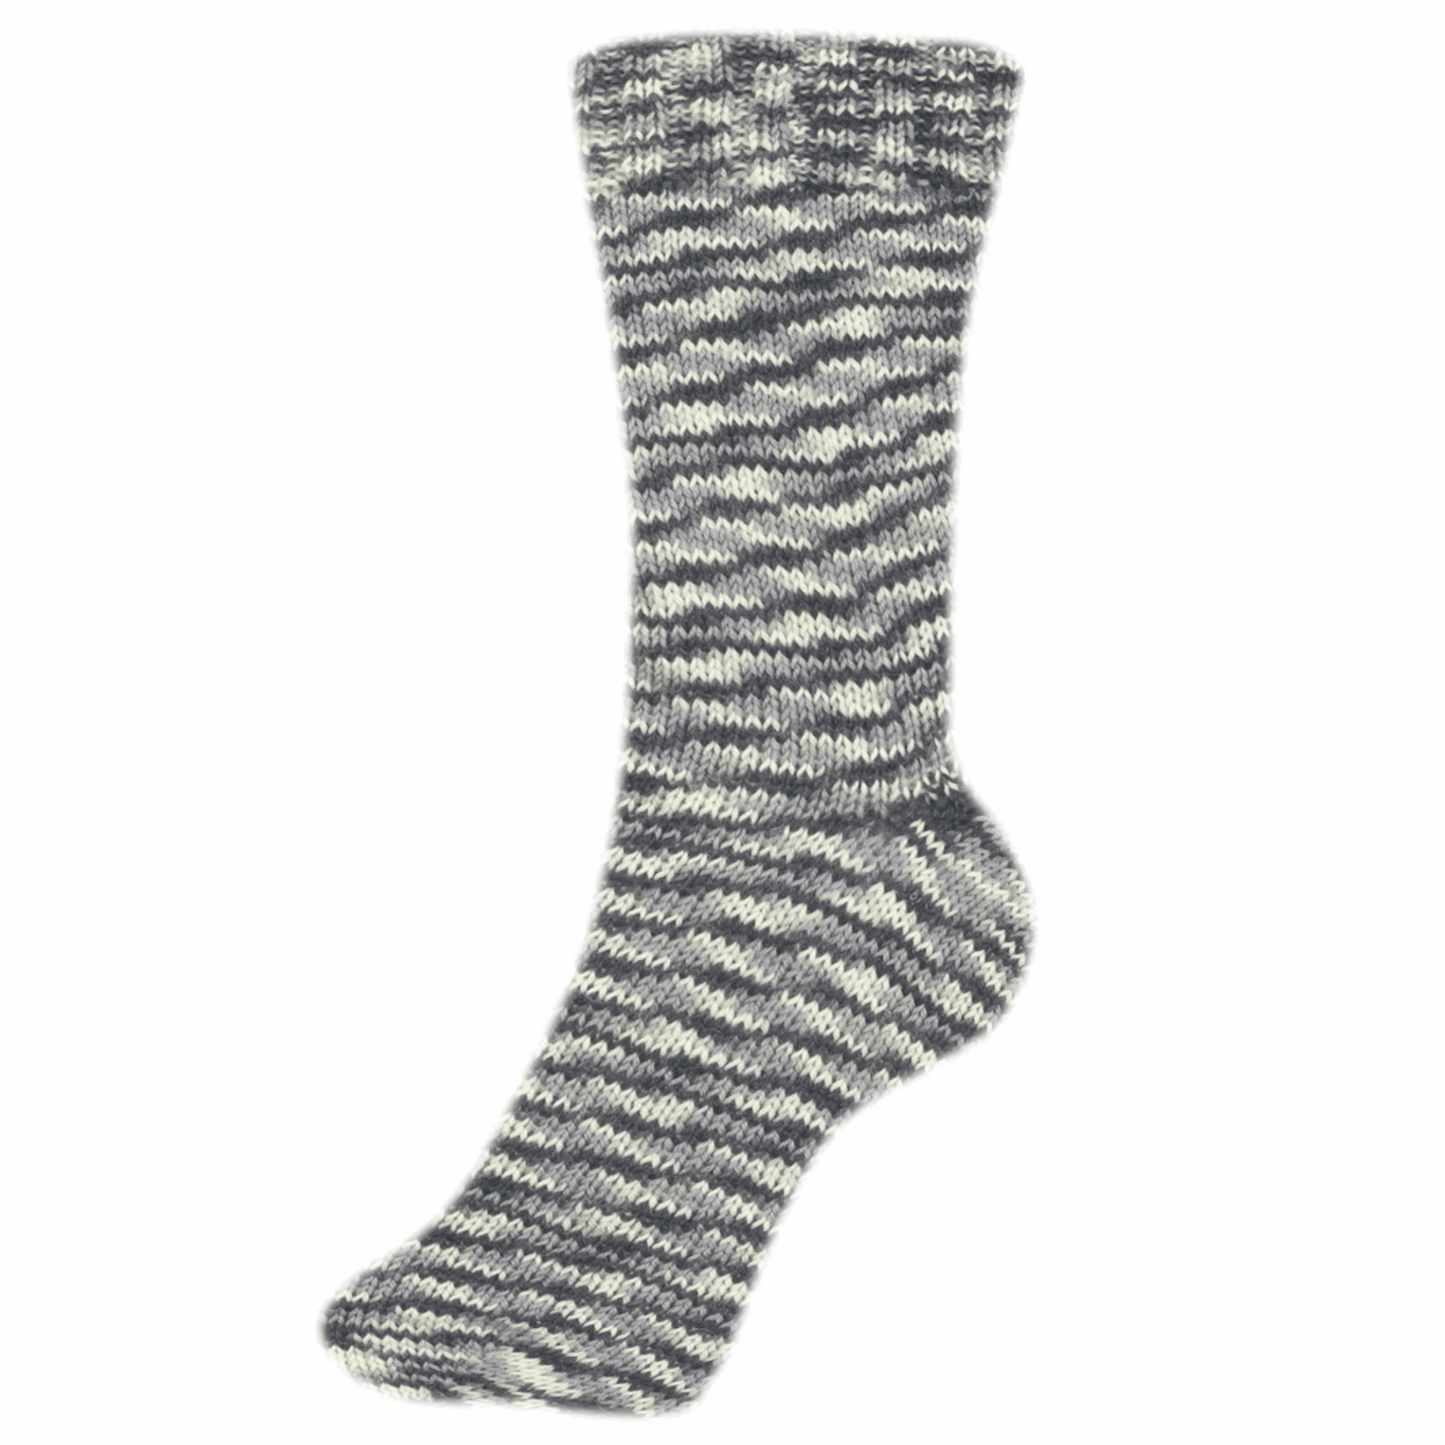 Fortissima socka 4-ply, 90028, color 2407, gray